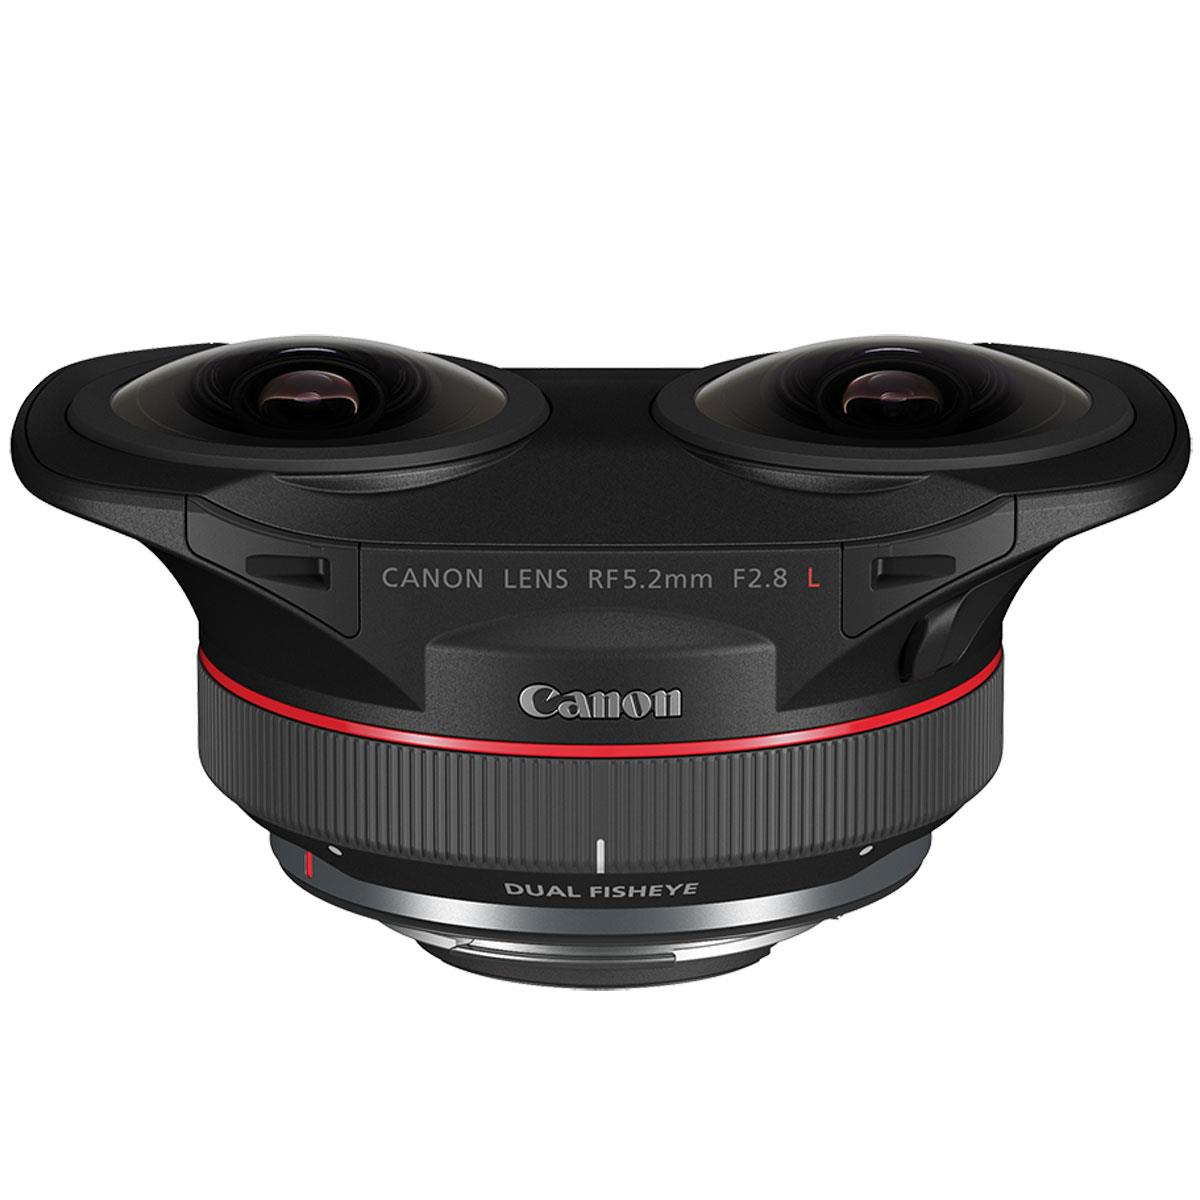 Canon RF 5.2mm F2.8 L Dual Fisheye 3D VR Lens